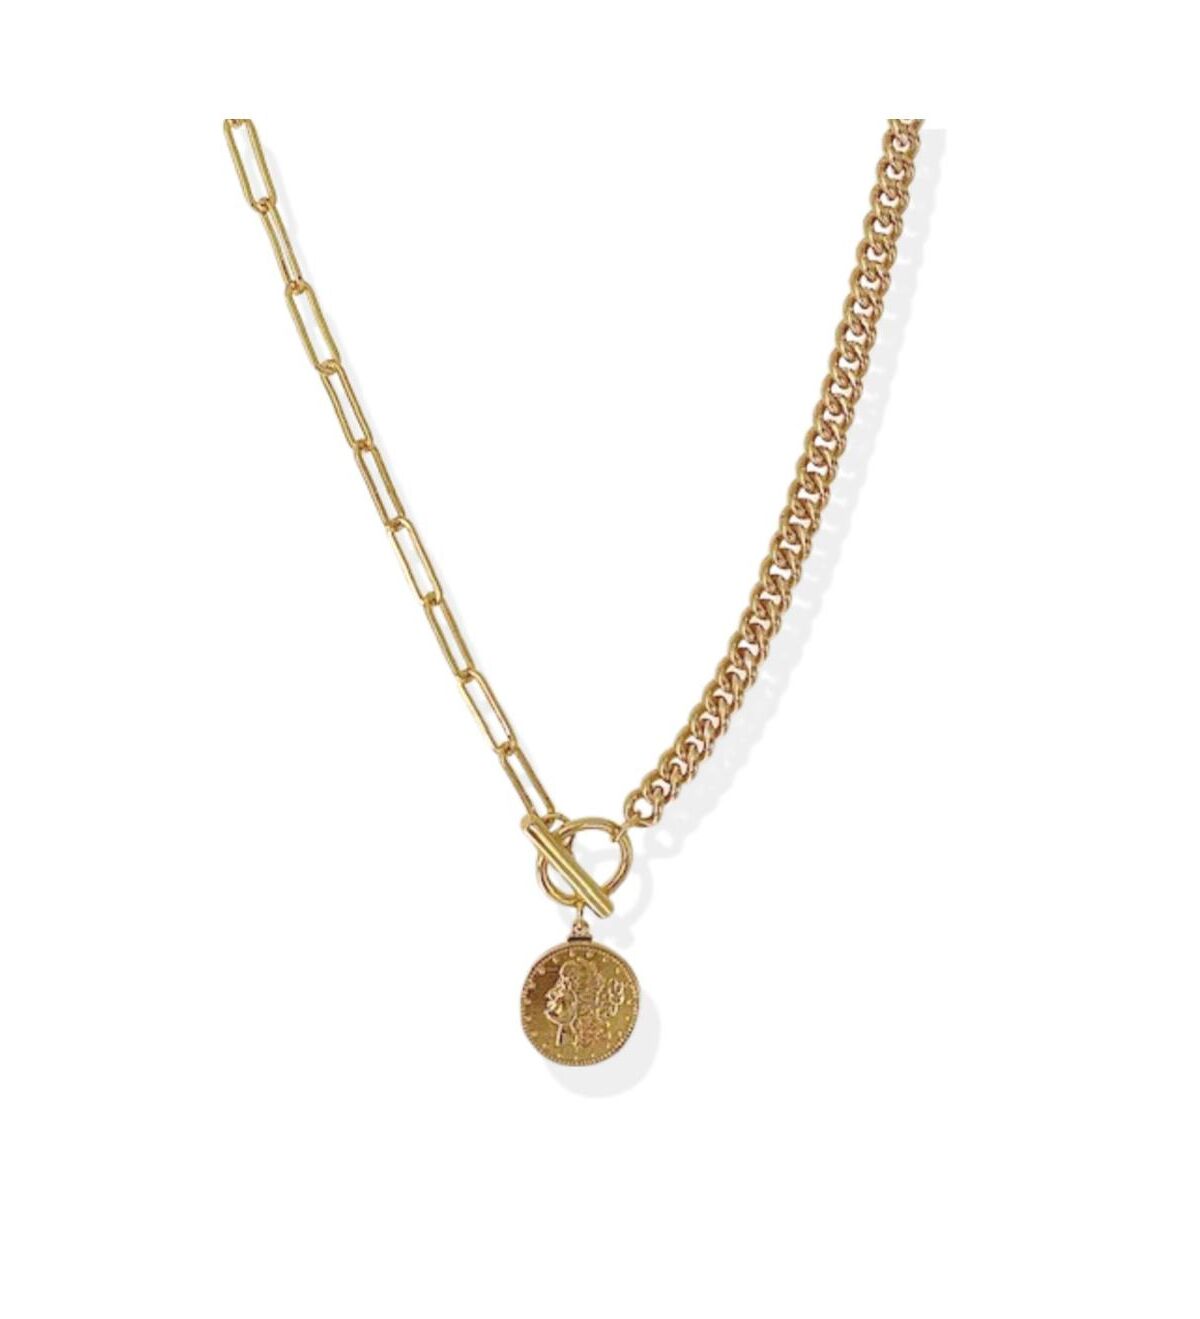 Avery Allison Avery Goddess Coin Chain - Gold